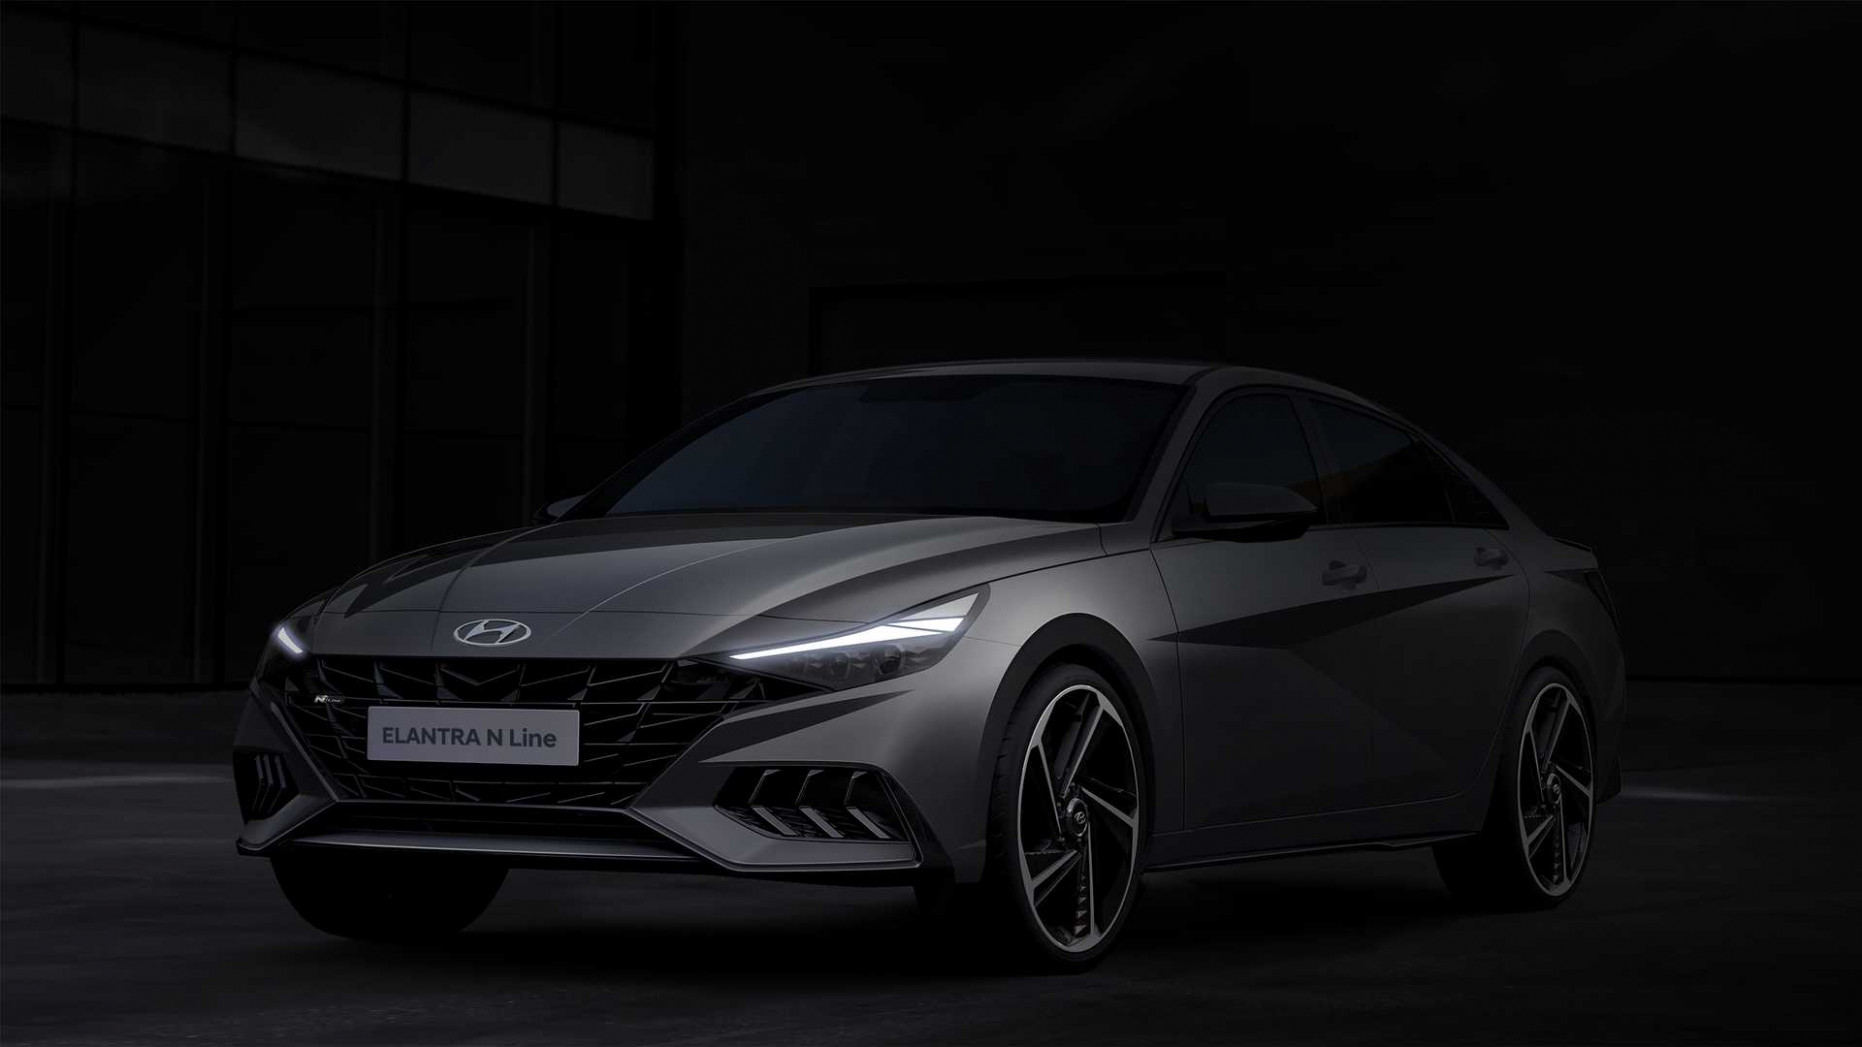 Performance and New Engine 2022 Hyundai Elantra Gt